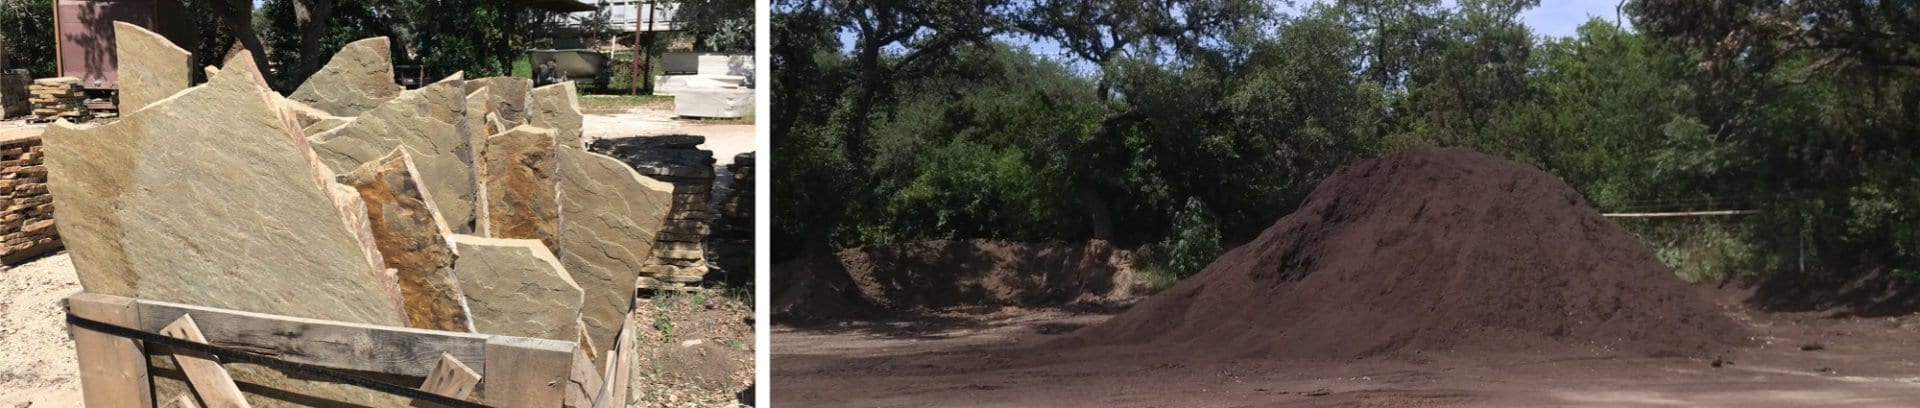 Flagstone and Mulch - Texas Soil and Stone San Antonio